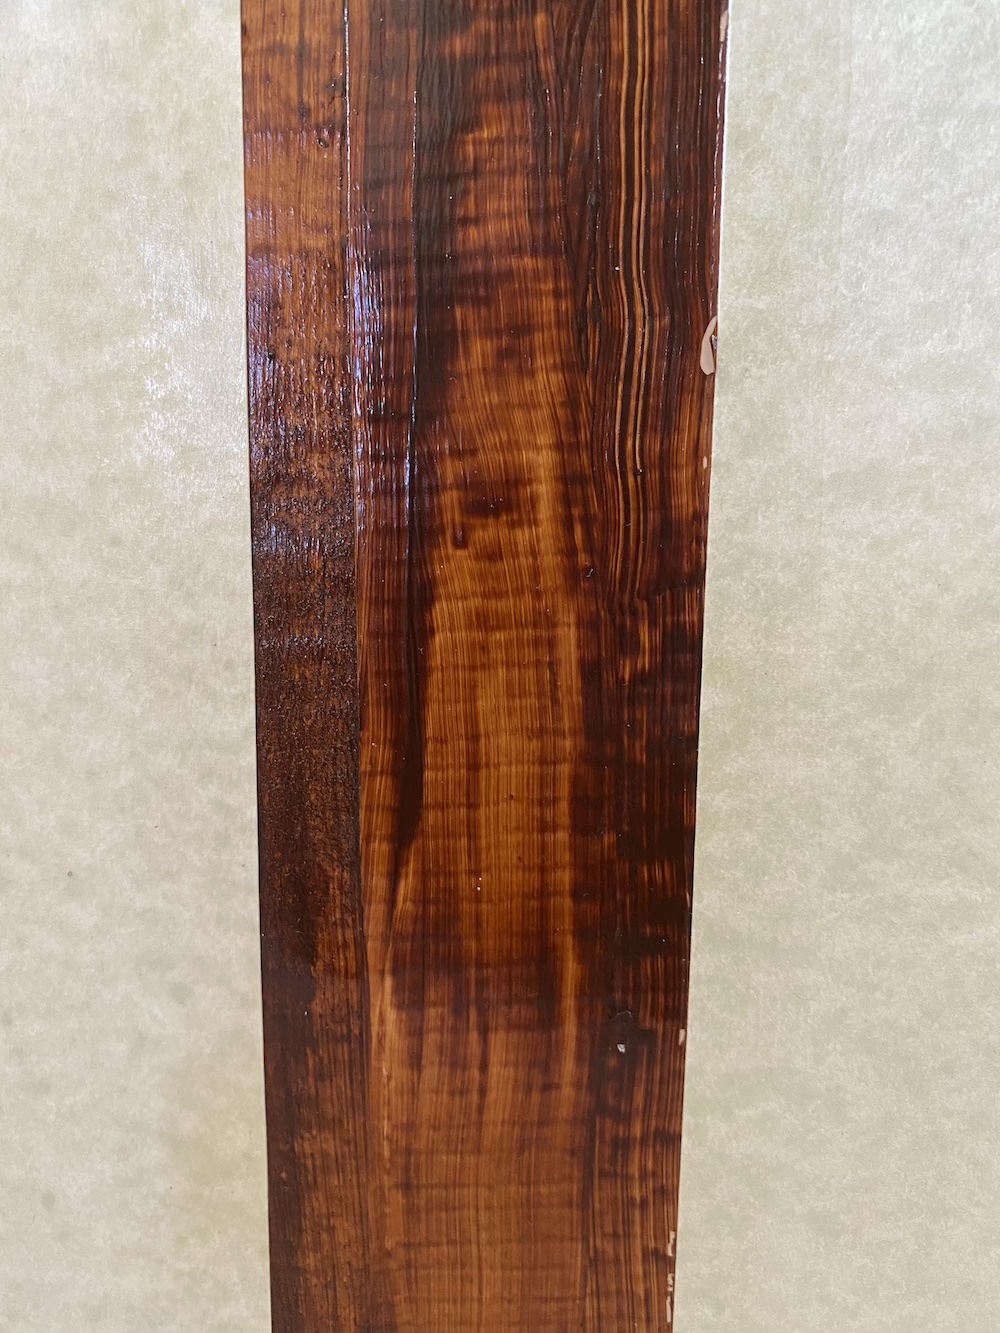 close-up of woodgrain